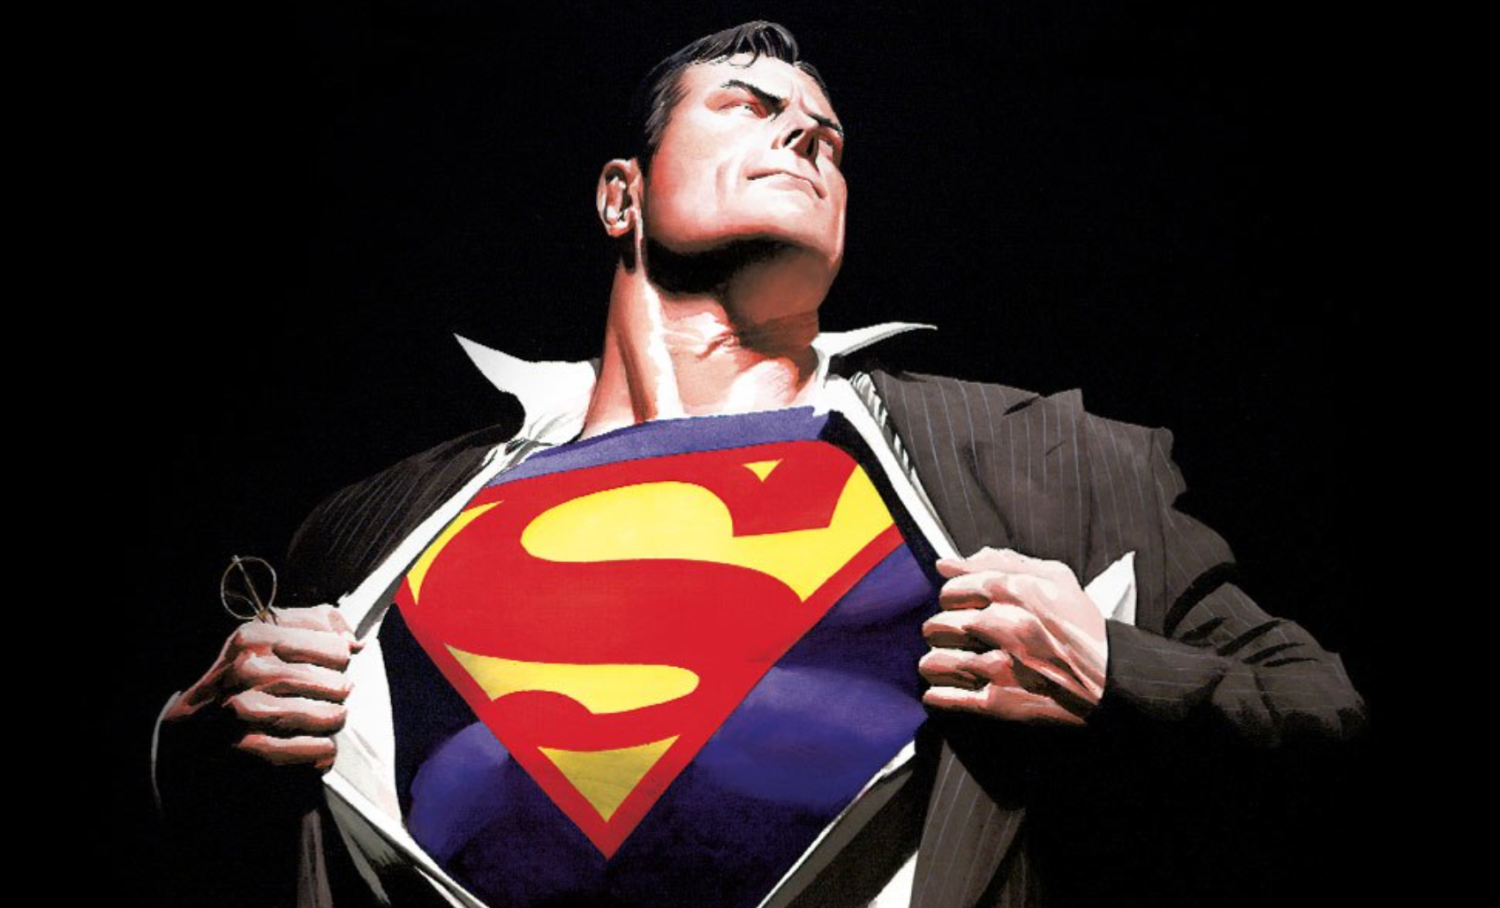 Super men games. Супермен разрывает рубашку. Superman game.